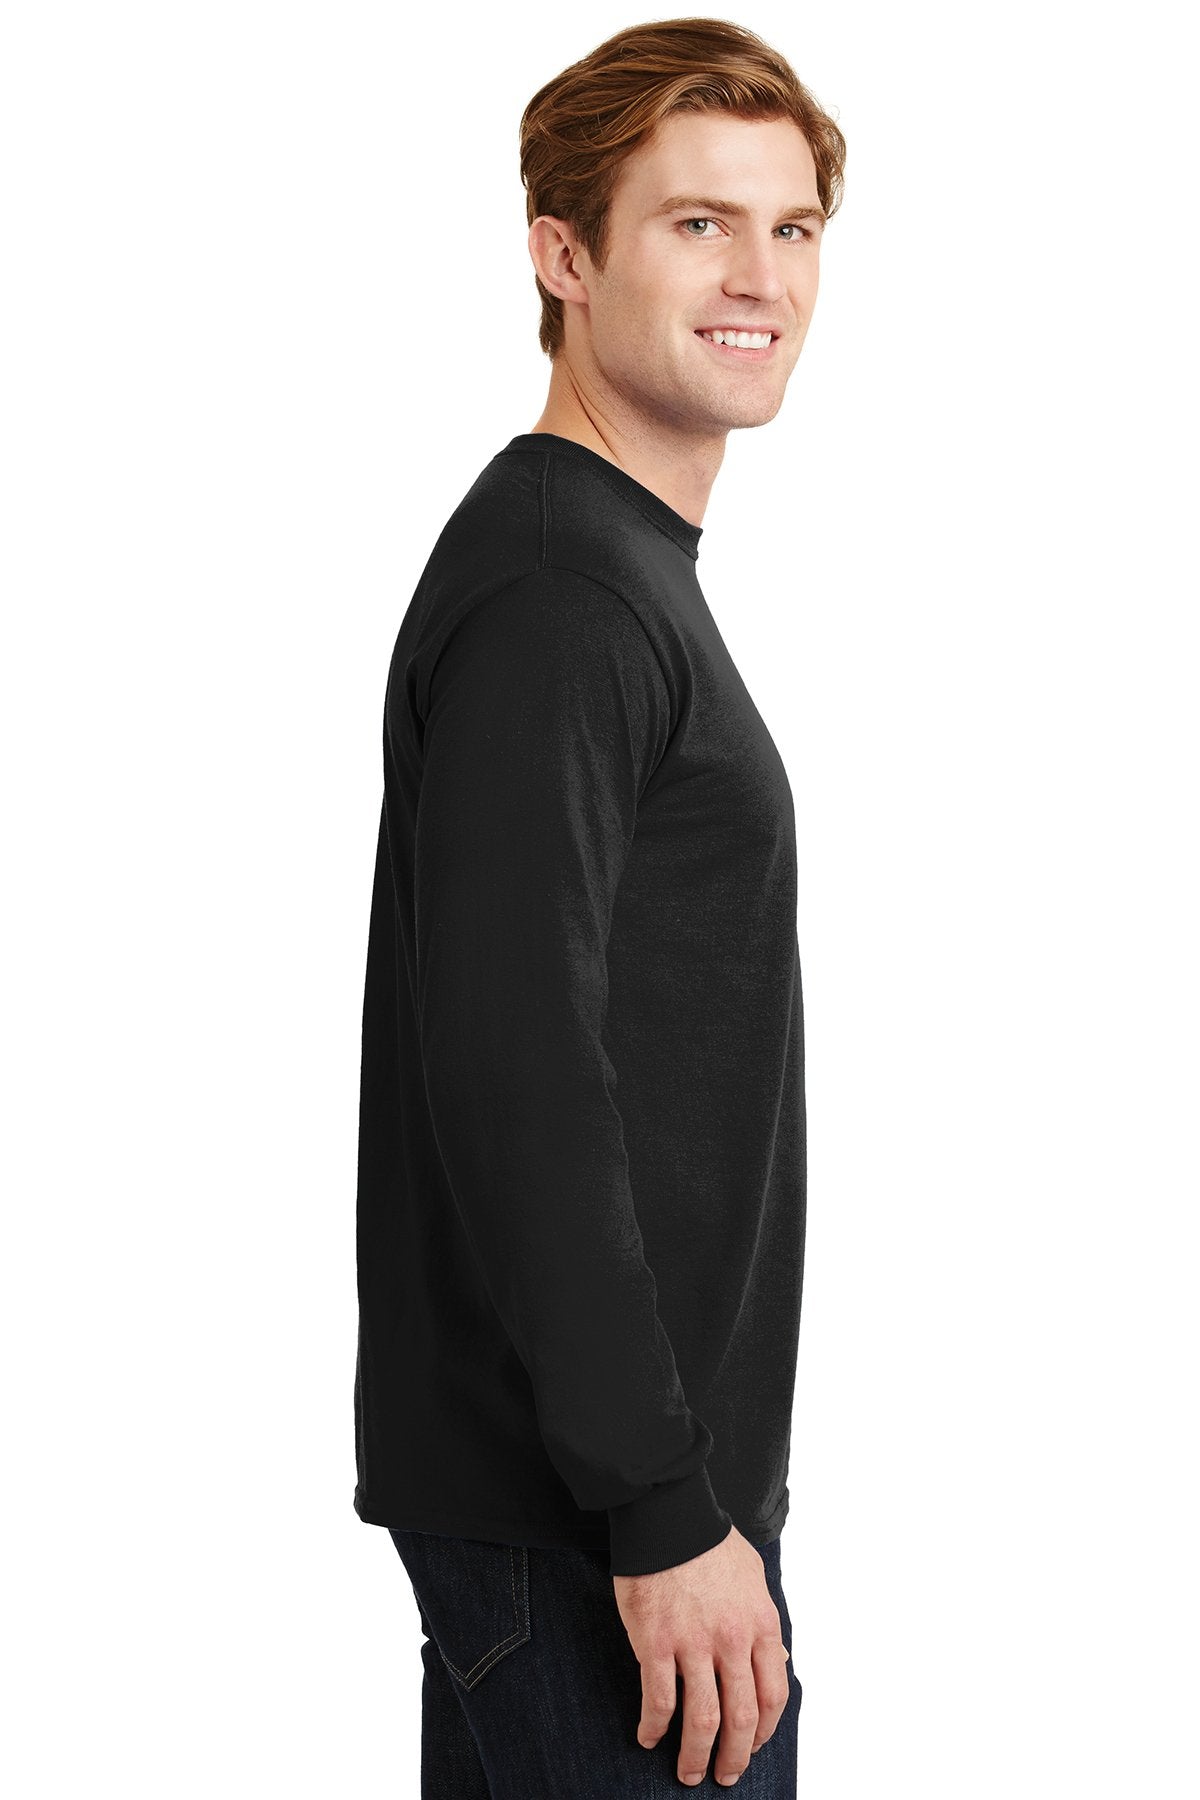 gildan dryblend cotton poly long sleeve t shirt 8400 black